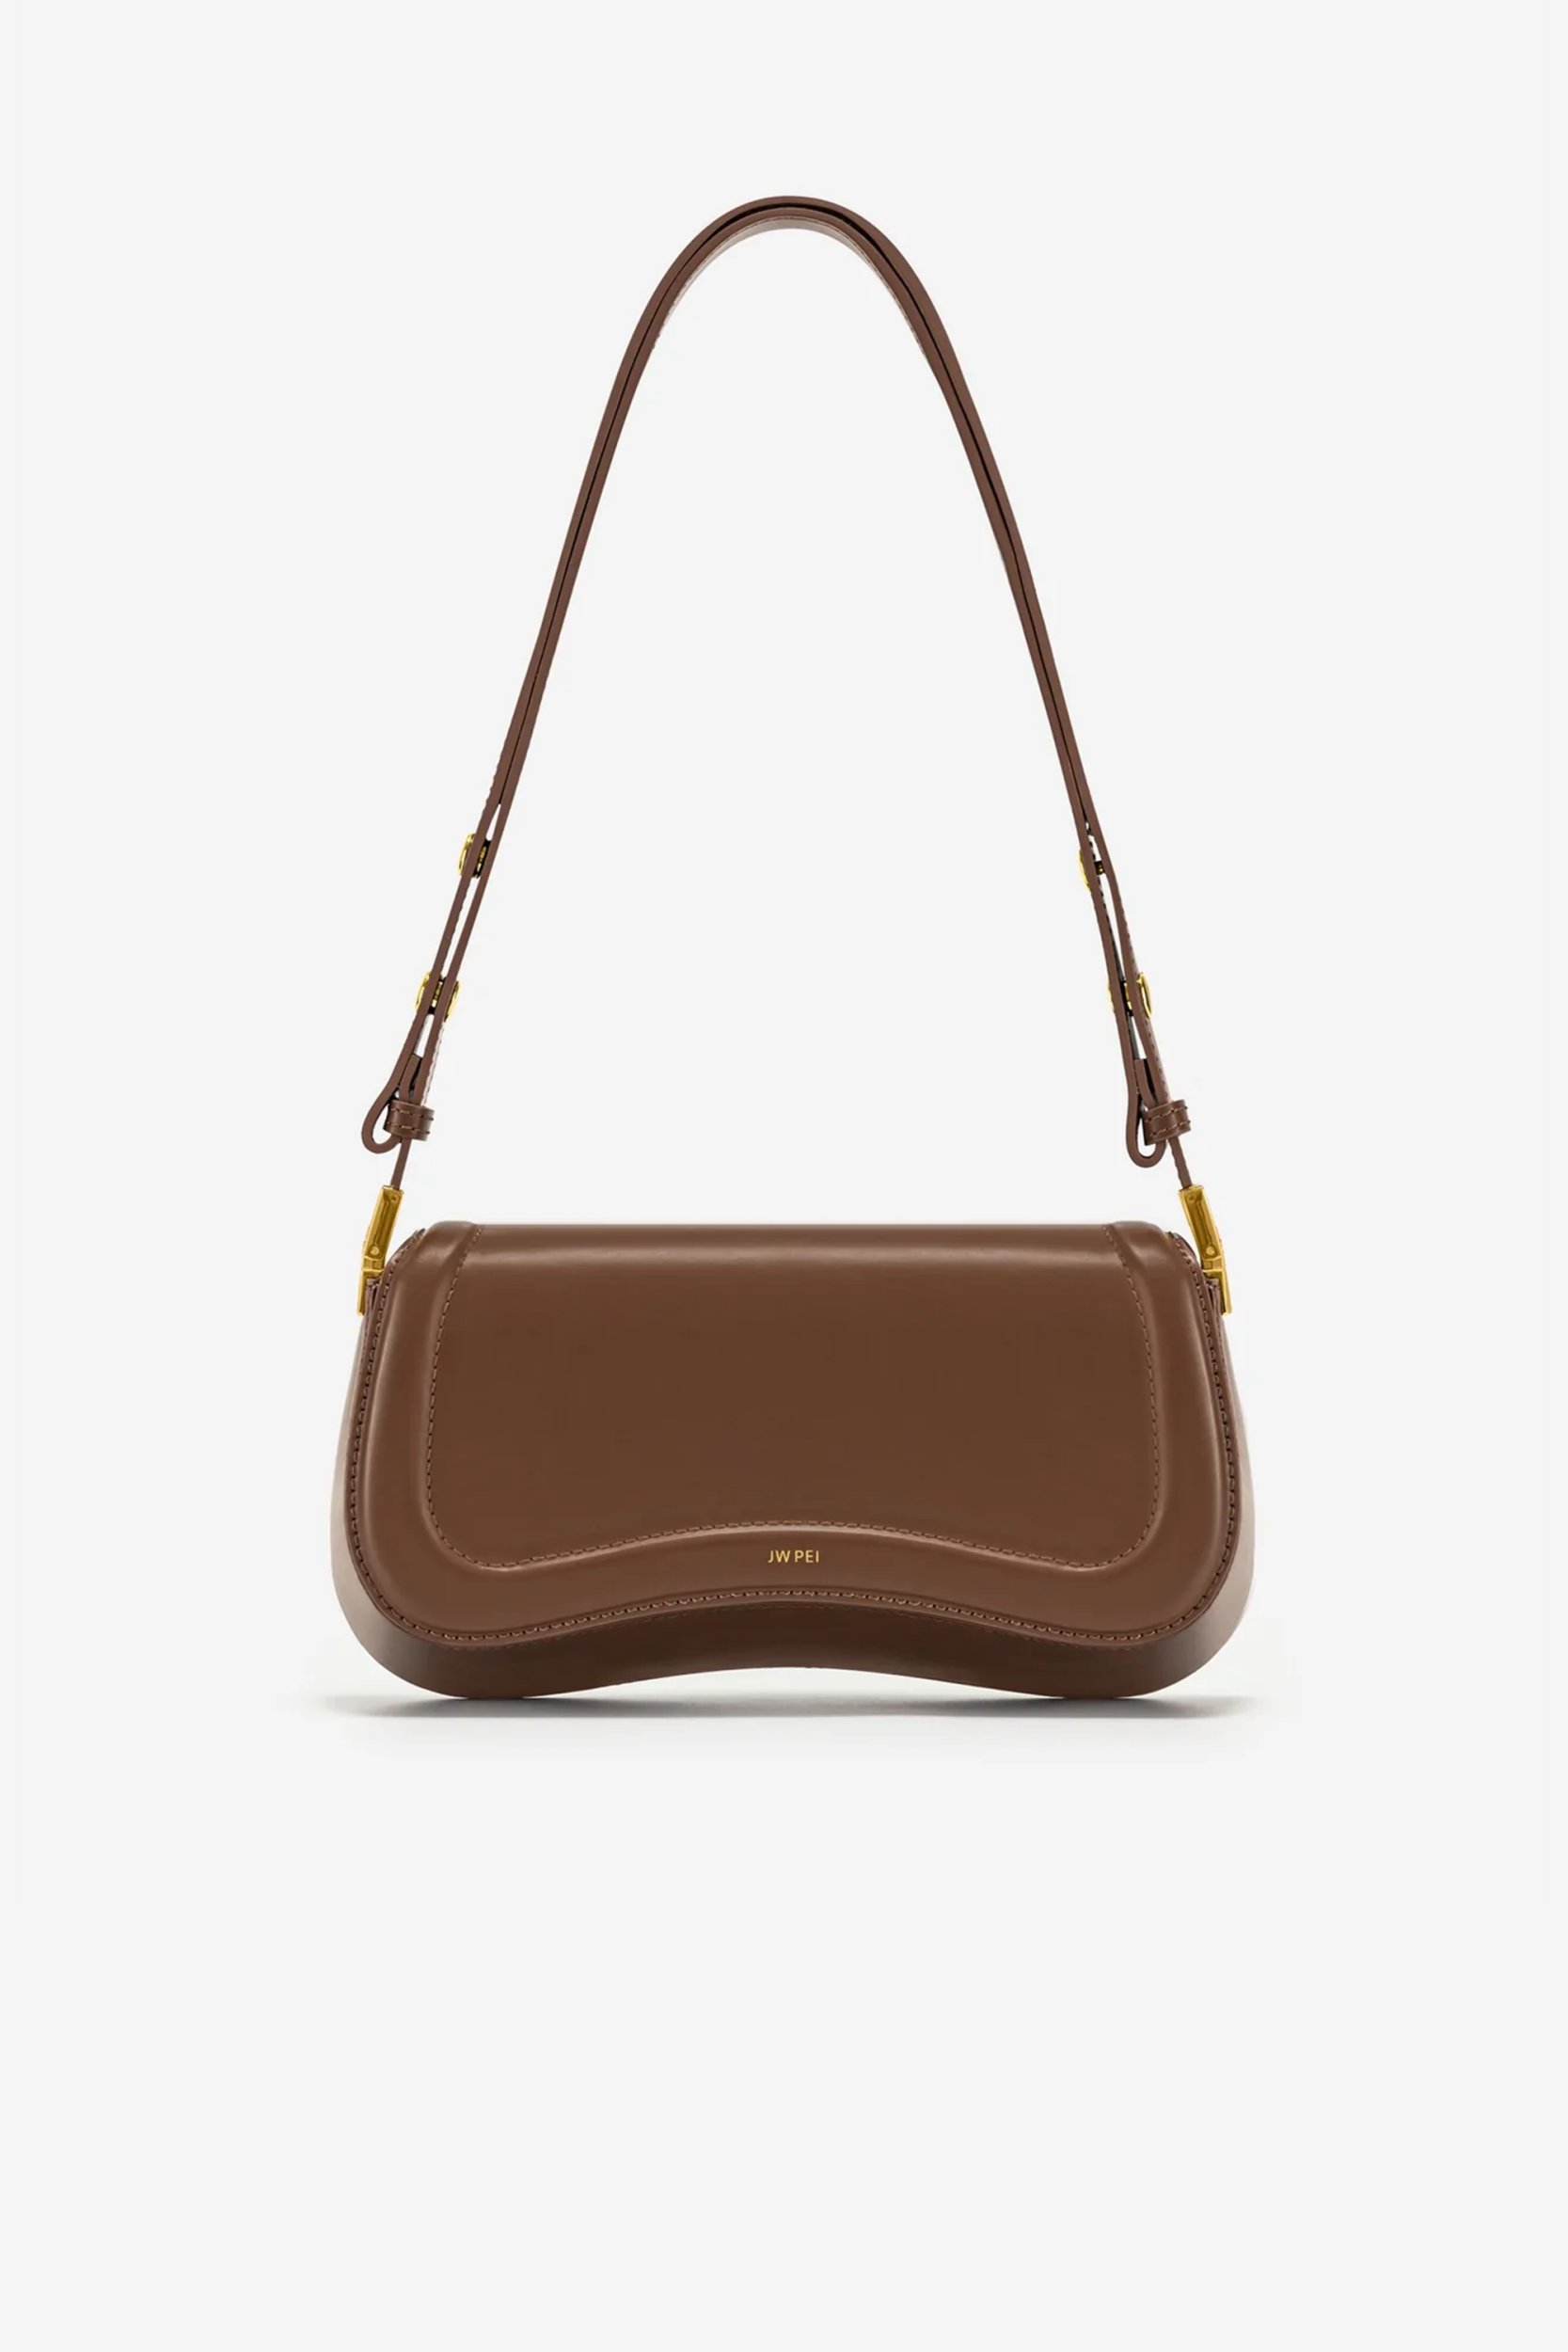 Patent Leather Handbags for Women 2023 New Shiny Fashion Shoulder Bag  Ladies Unique Design High Quality Luxury Female Bag Small